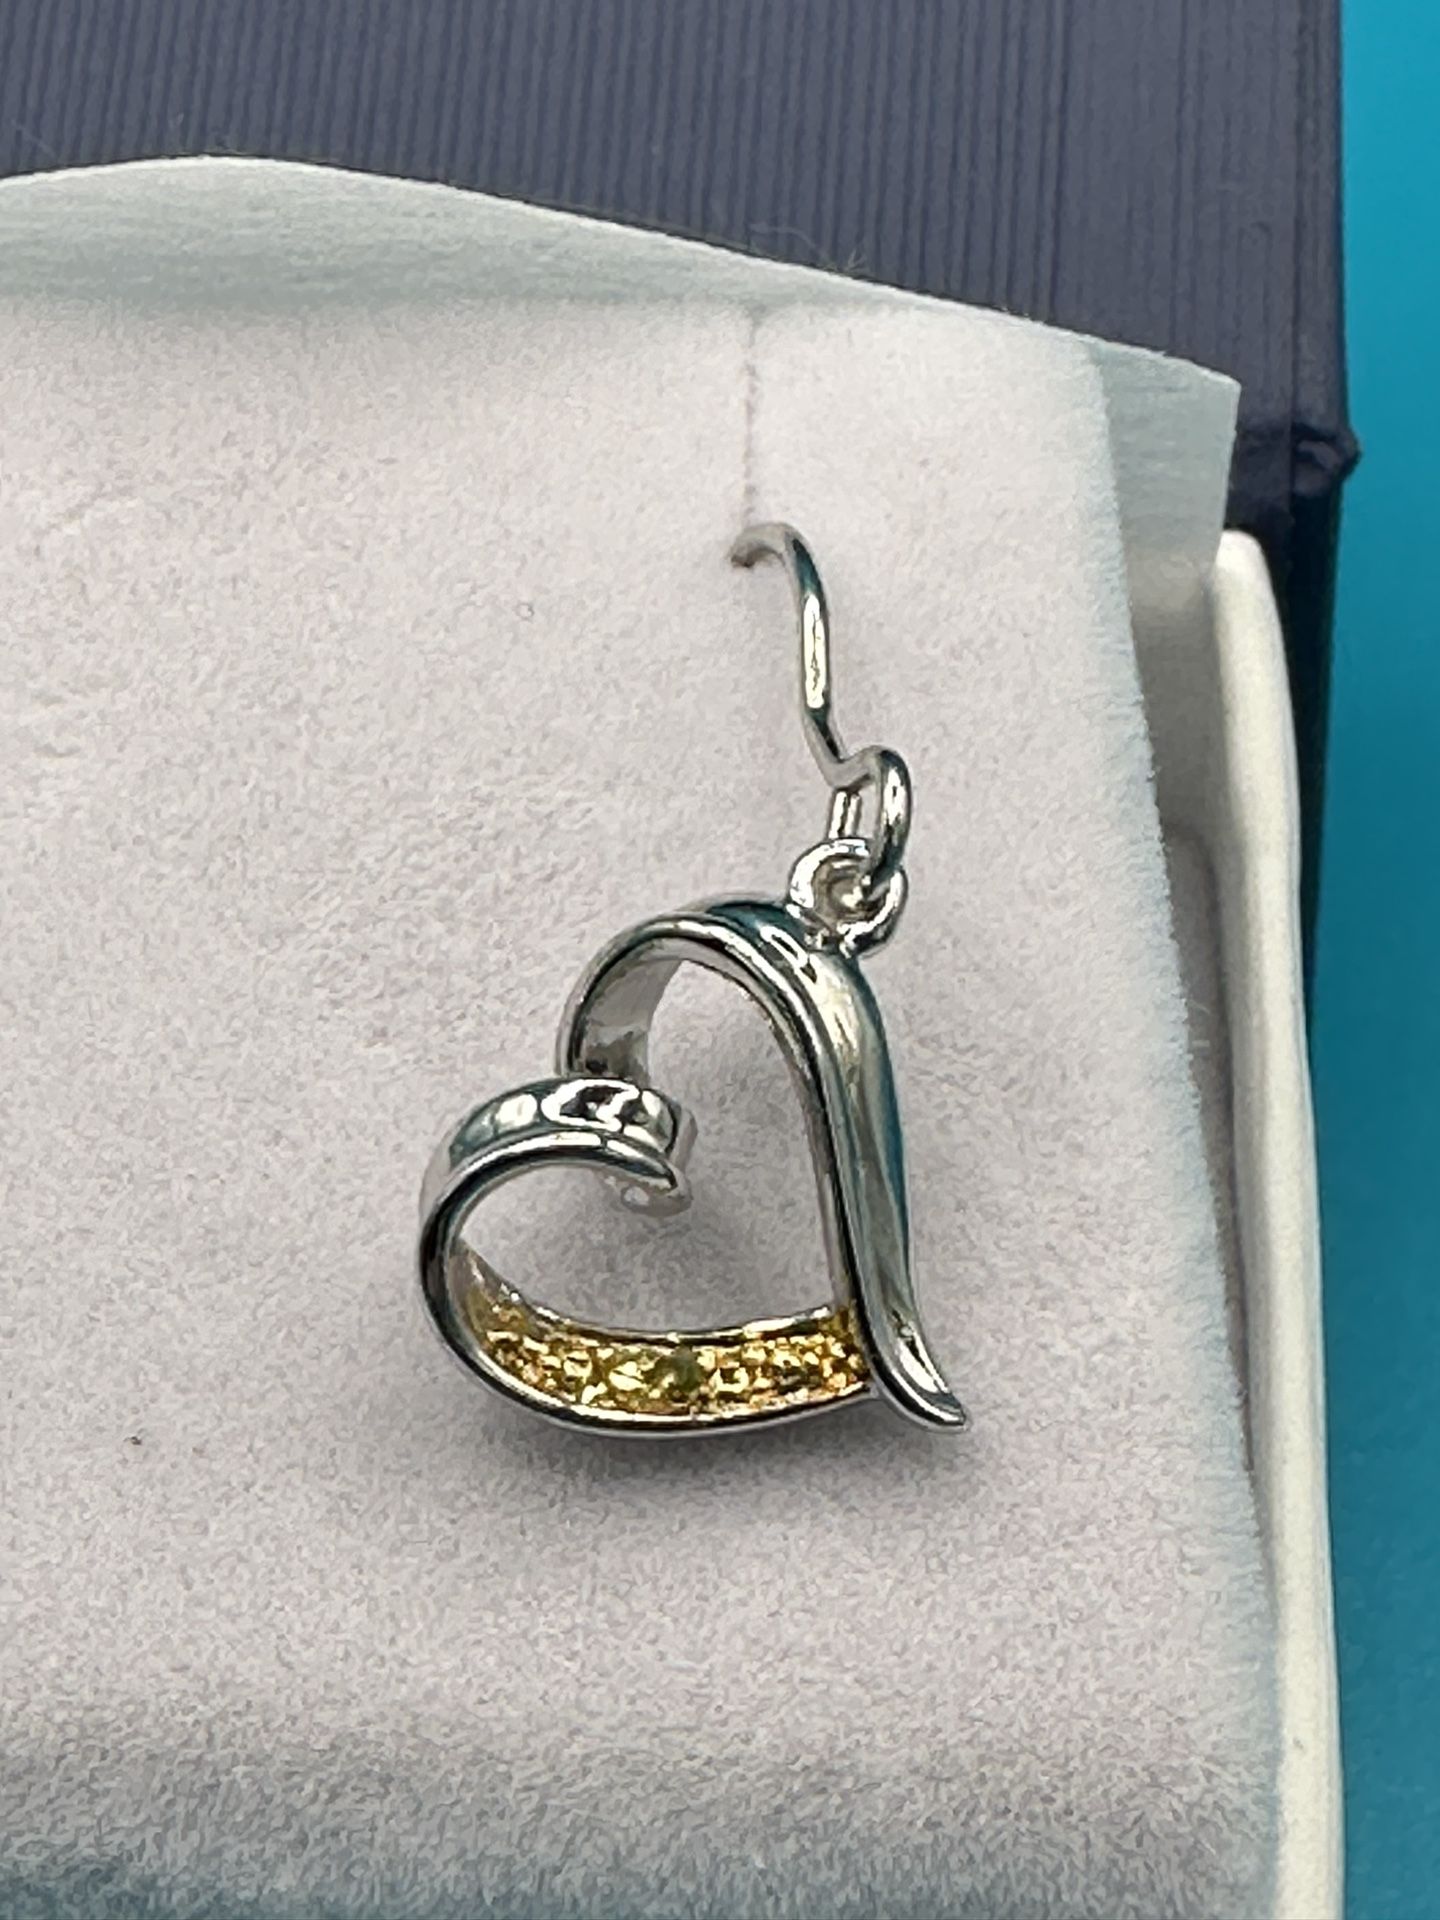 New Genuine Yellow Diamond Heart Dangle Earrings Sterling Silver Bright & Shiny !